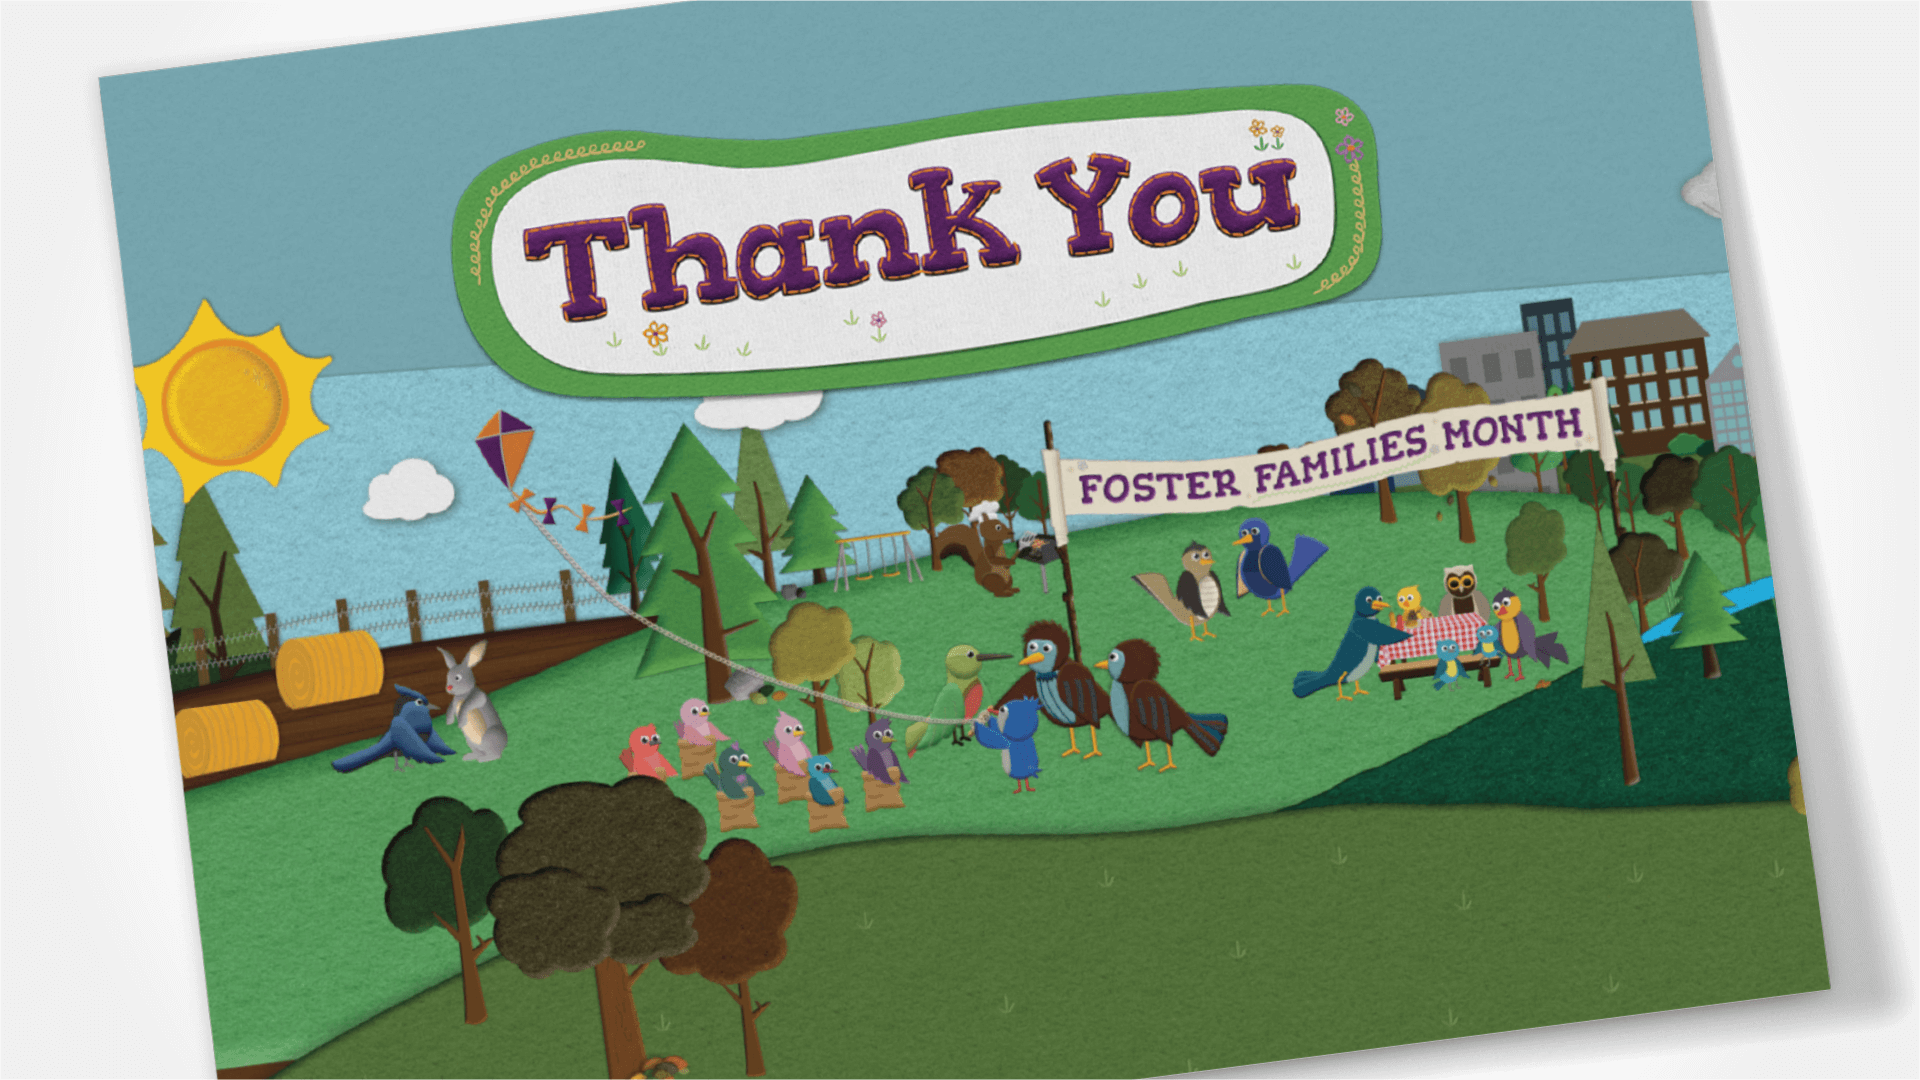 Saskatchewan Foster Families Association, Design, Foster Families Month Thank You Card, Portfolio Image